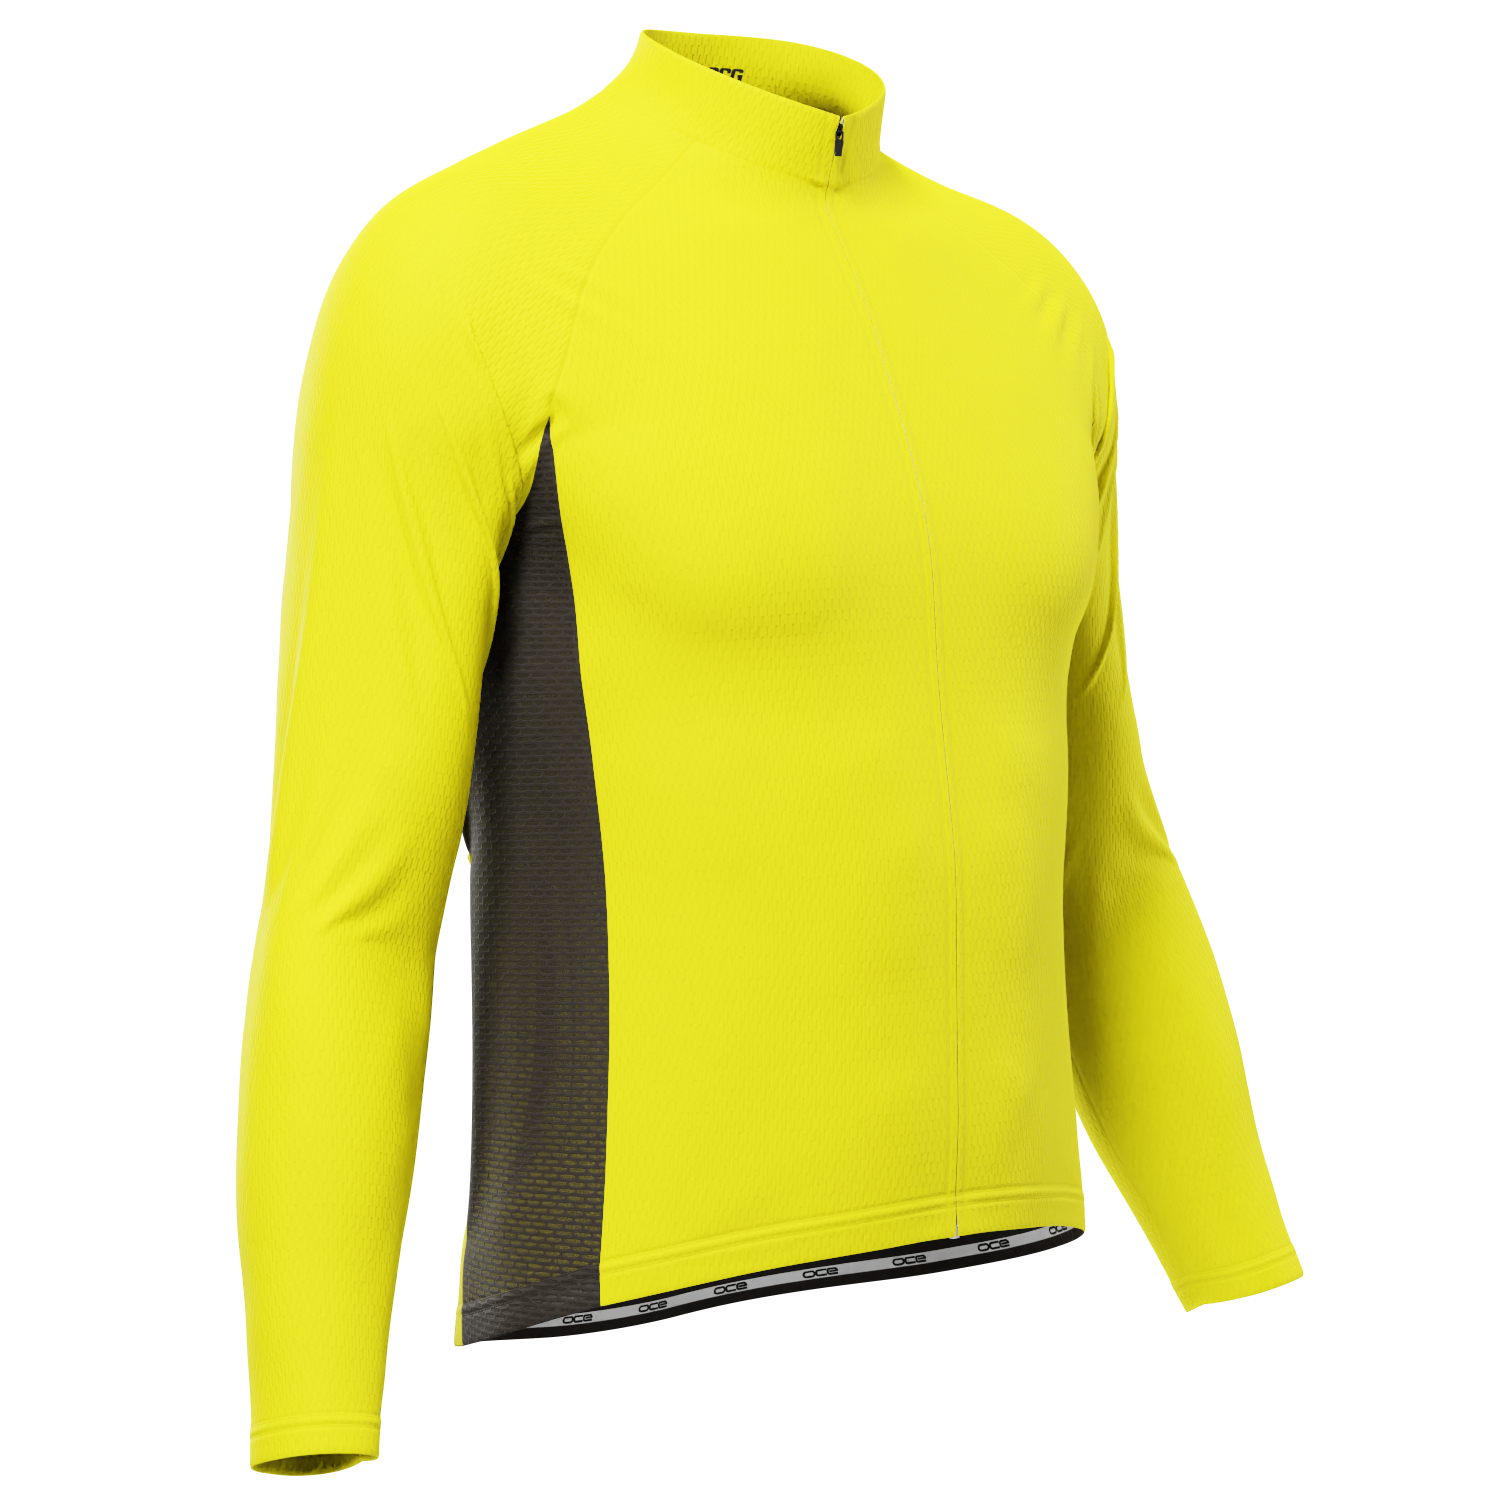 Men's OCG High Viz Neon Long Sleeve Cycling Jersey